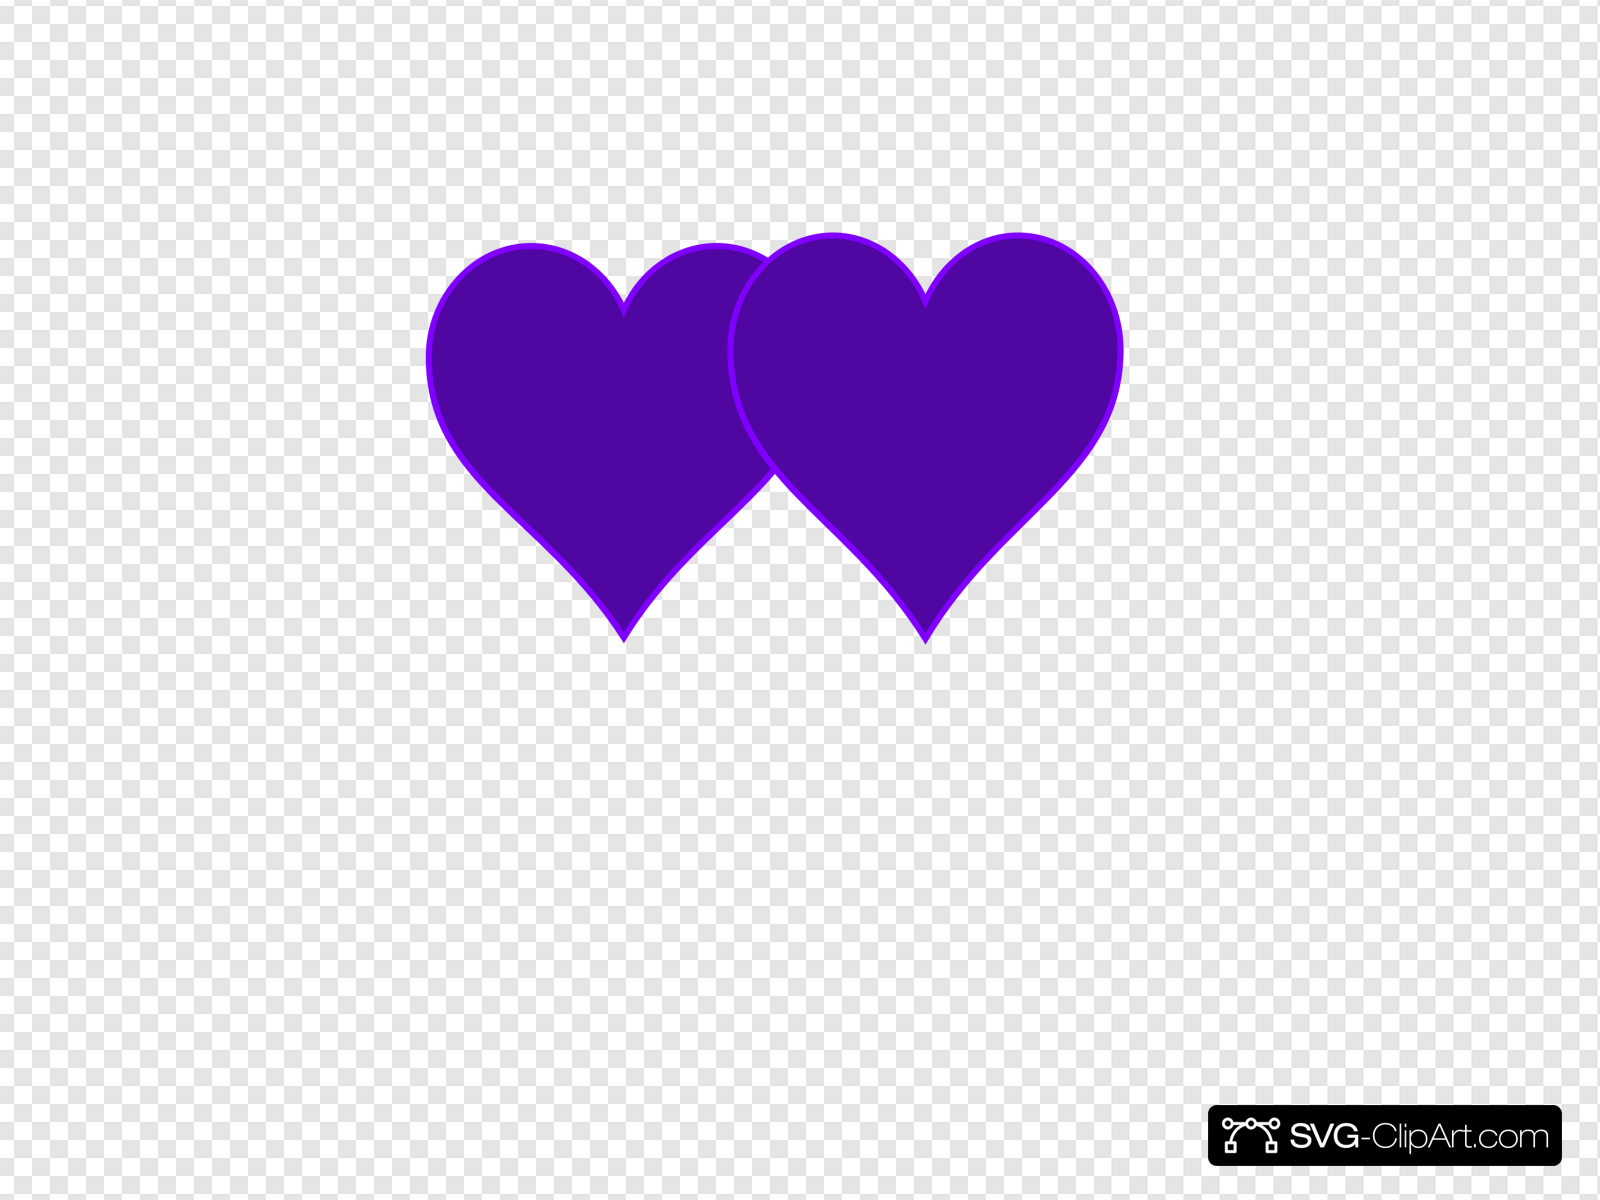 Double lined purple.